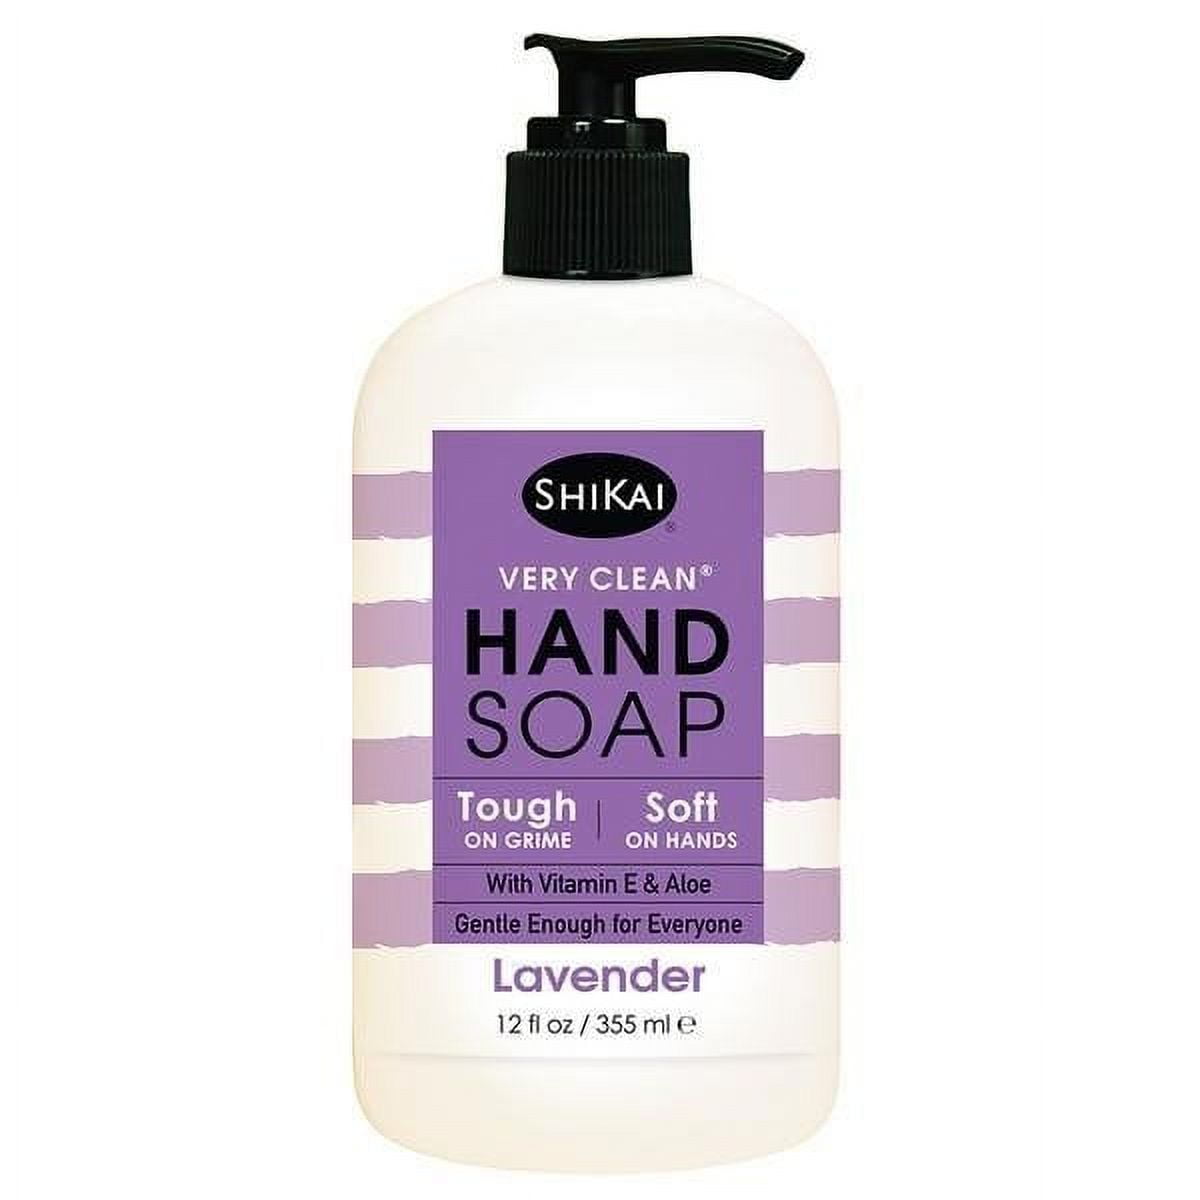 O'Keeffe's Working Hands Moisturizing Liquid Hand Soap for Dry Skin,  Peppermint, 12 fl oz (354 ml)